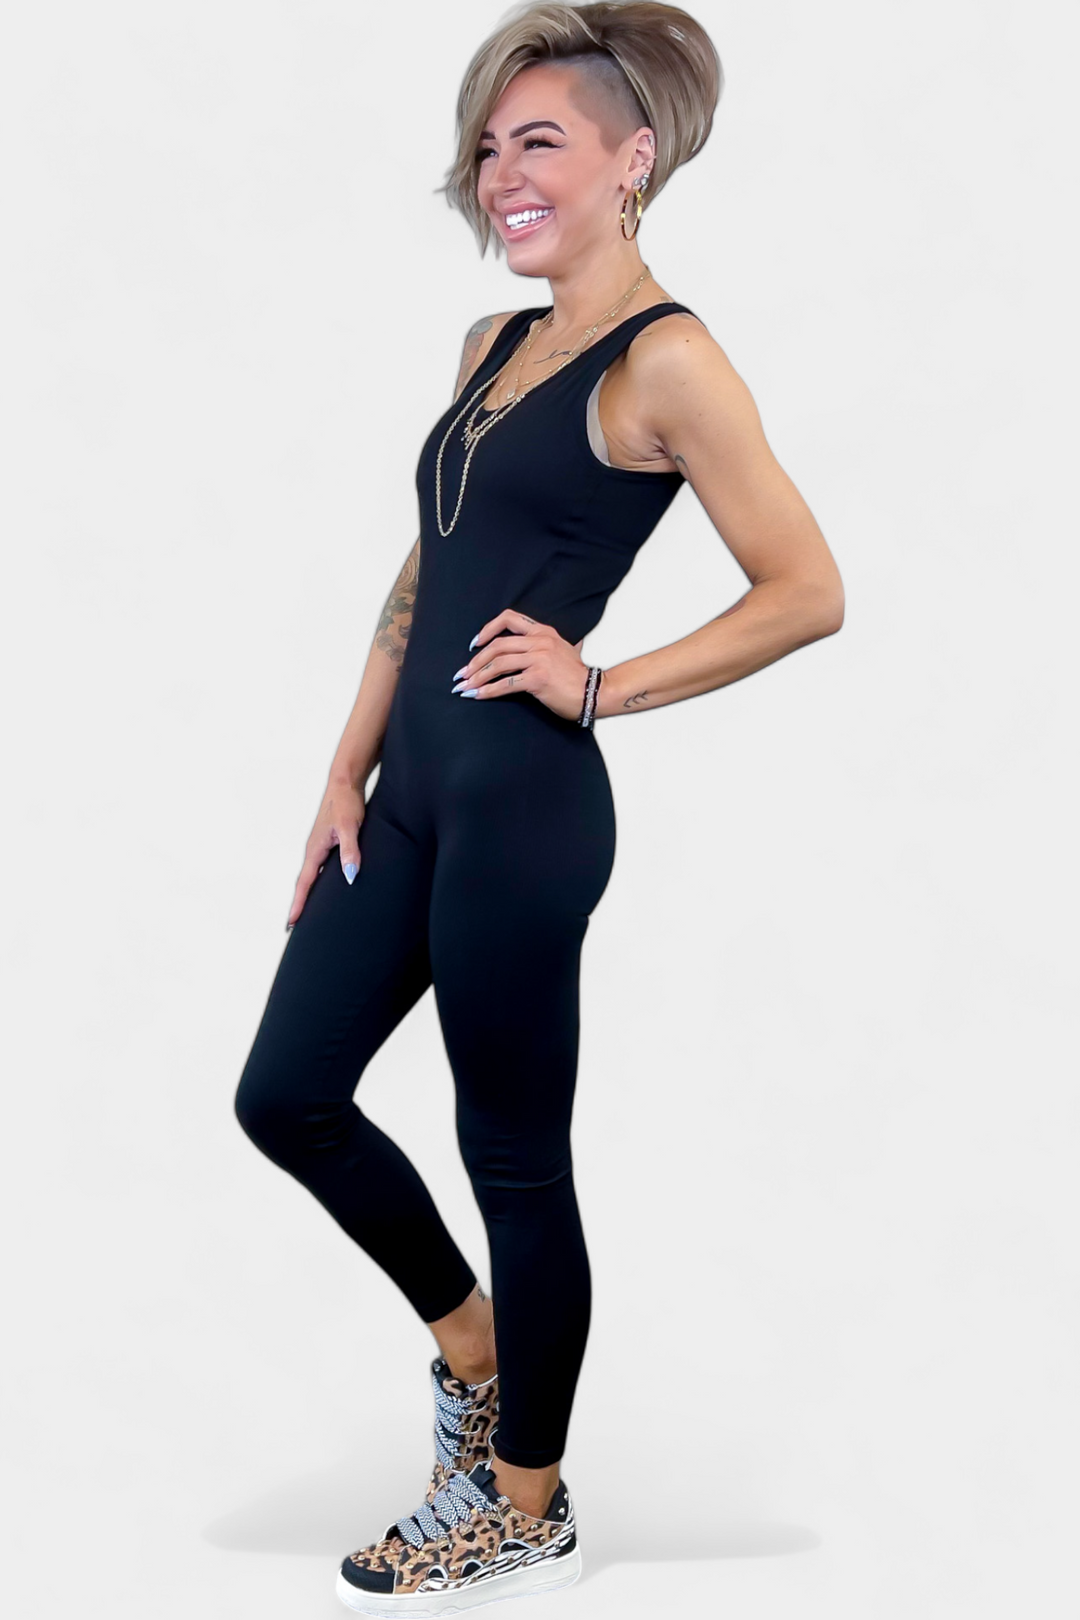 Black Seamless Sports Jumpsuit – The ZigZag Stripe